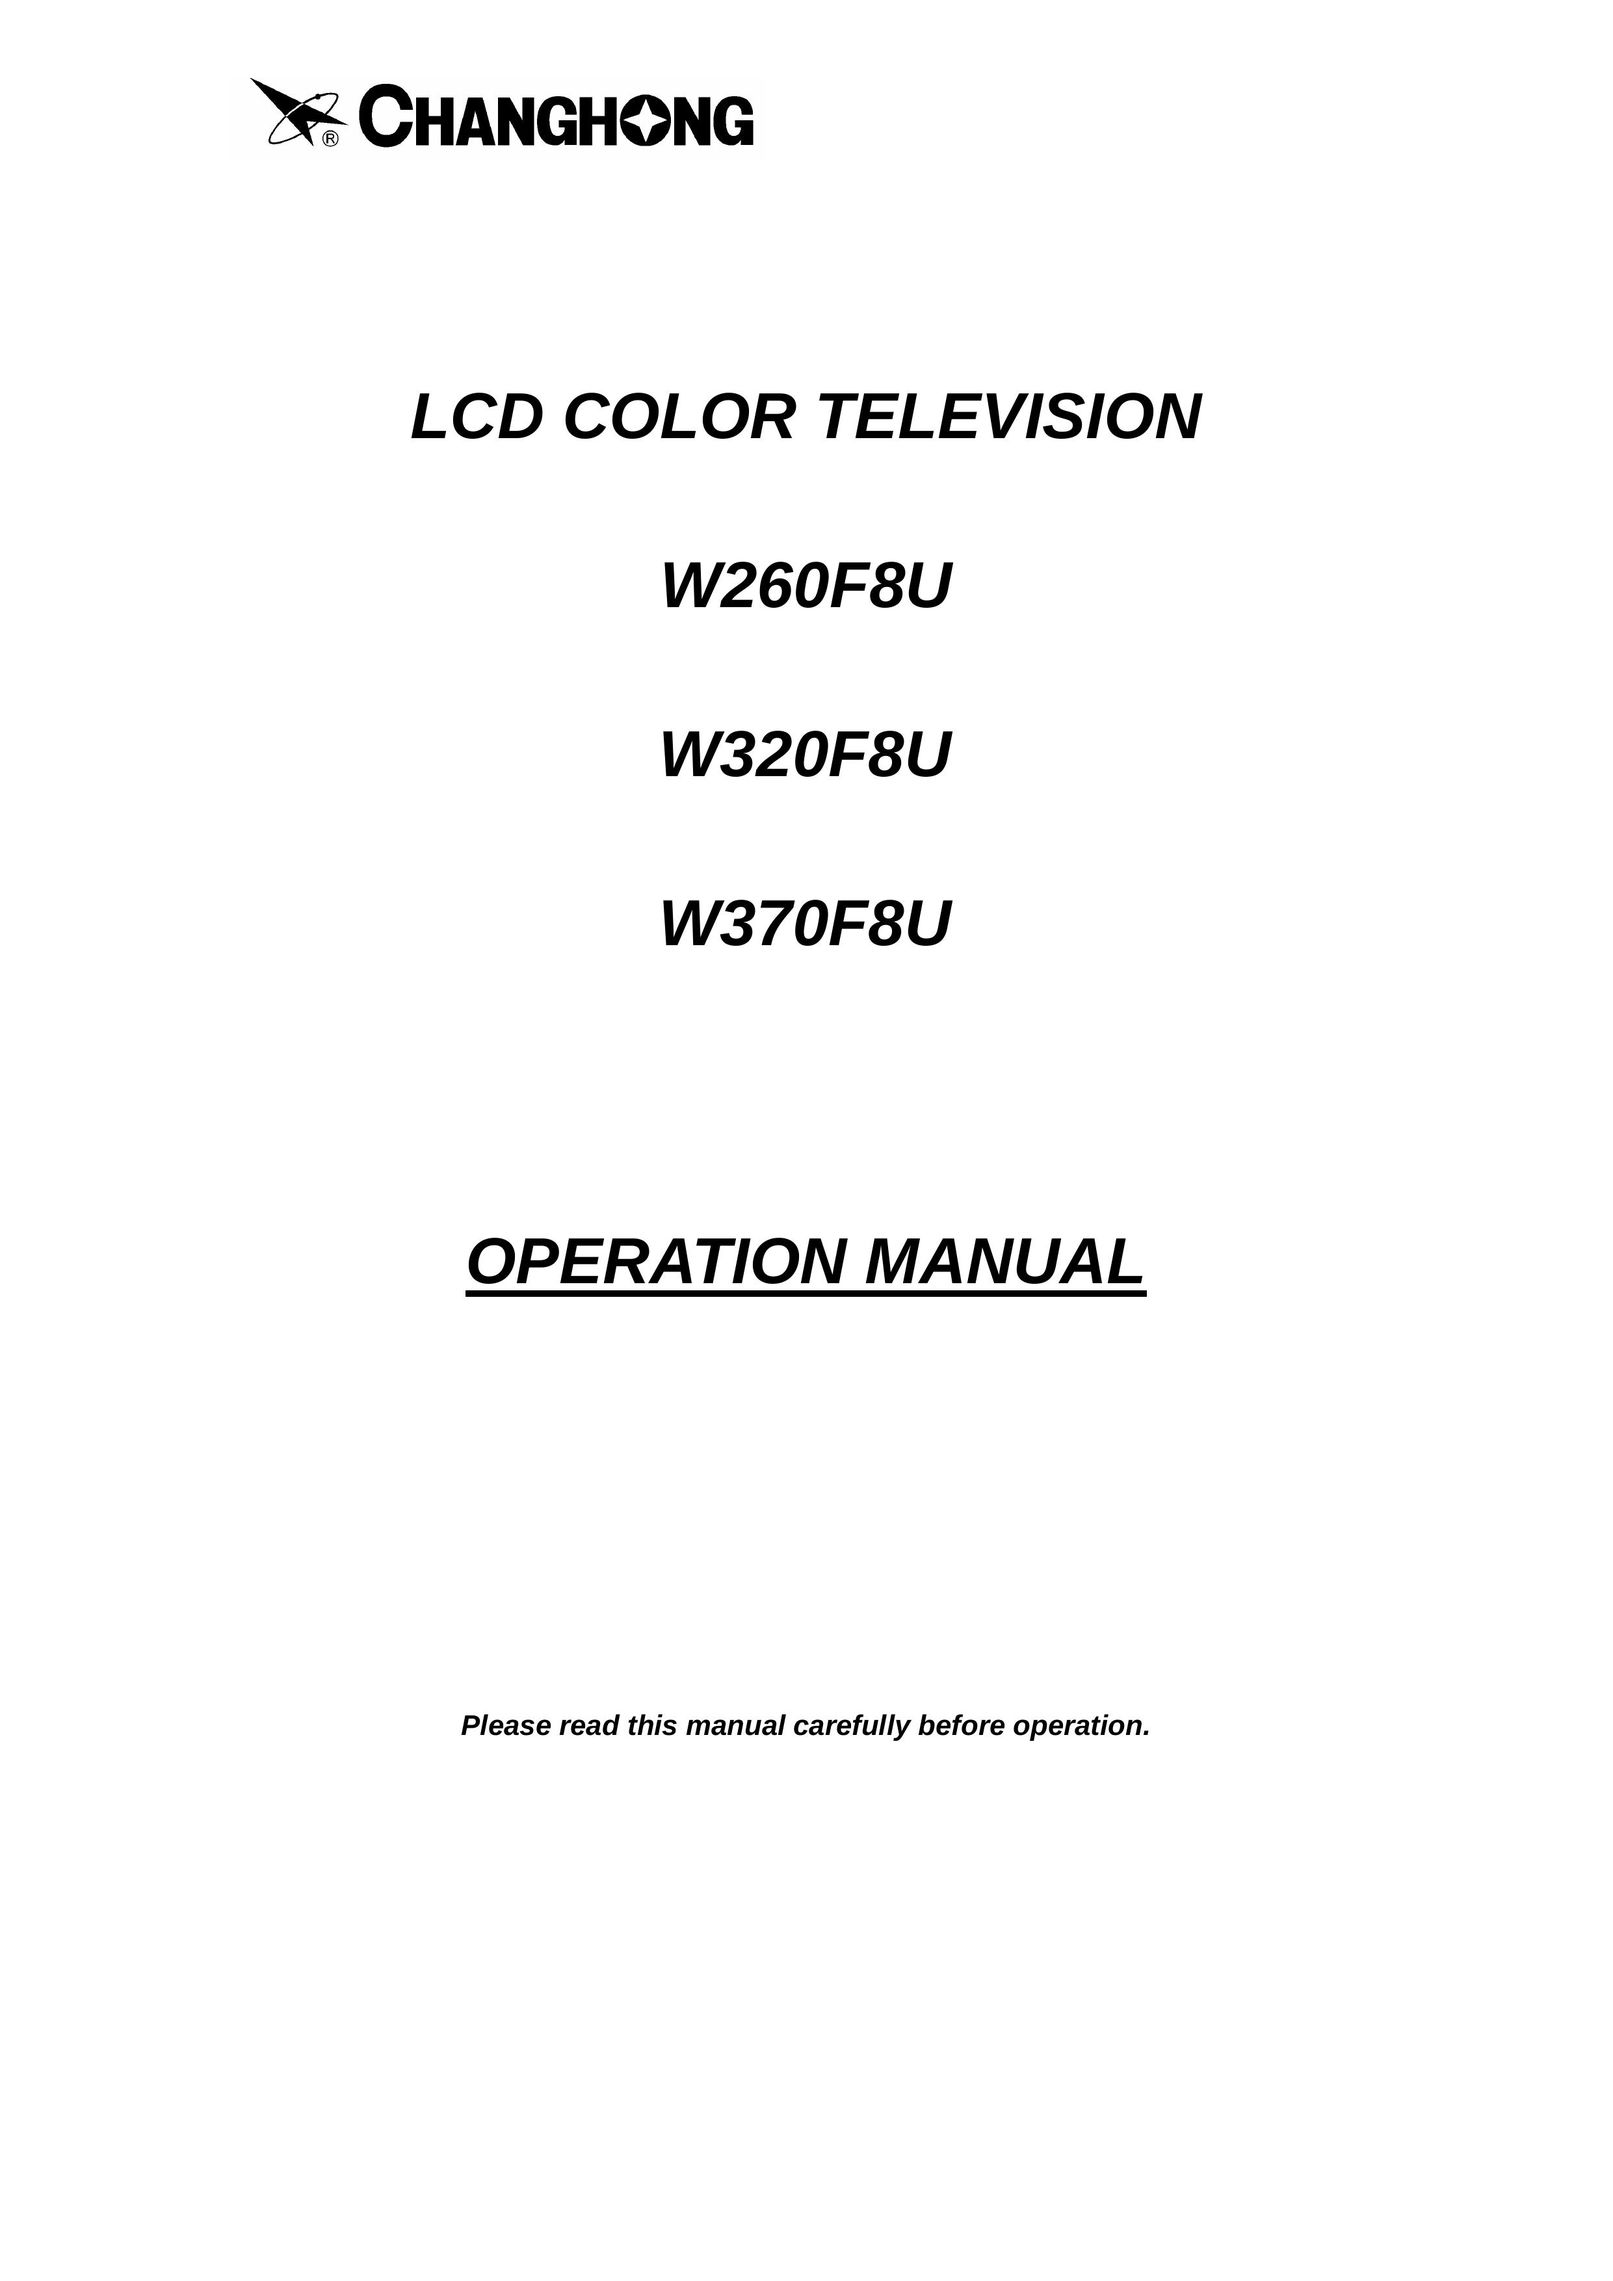 Changhong Electric W260F8U, W320F8U, W370F8U Flat Panel Television User Manual